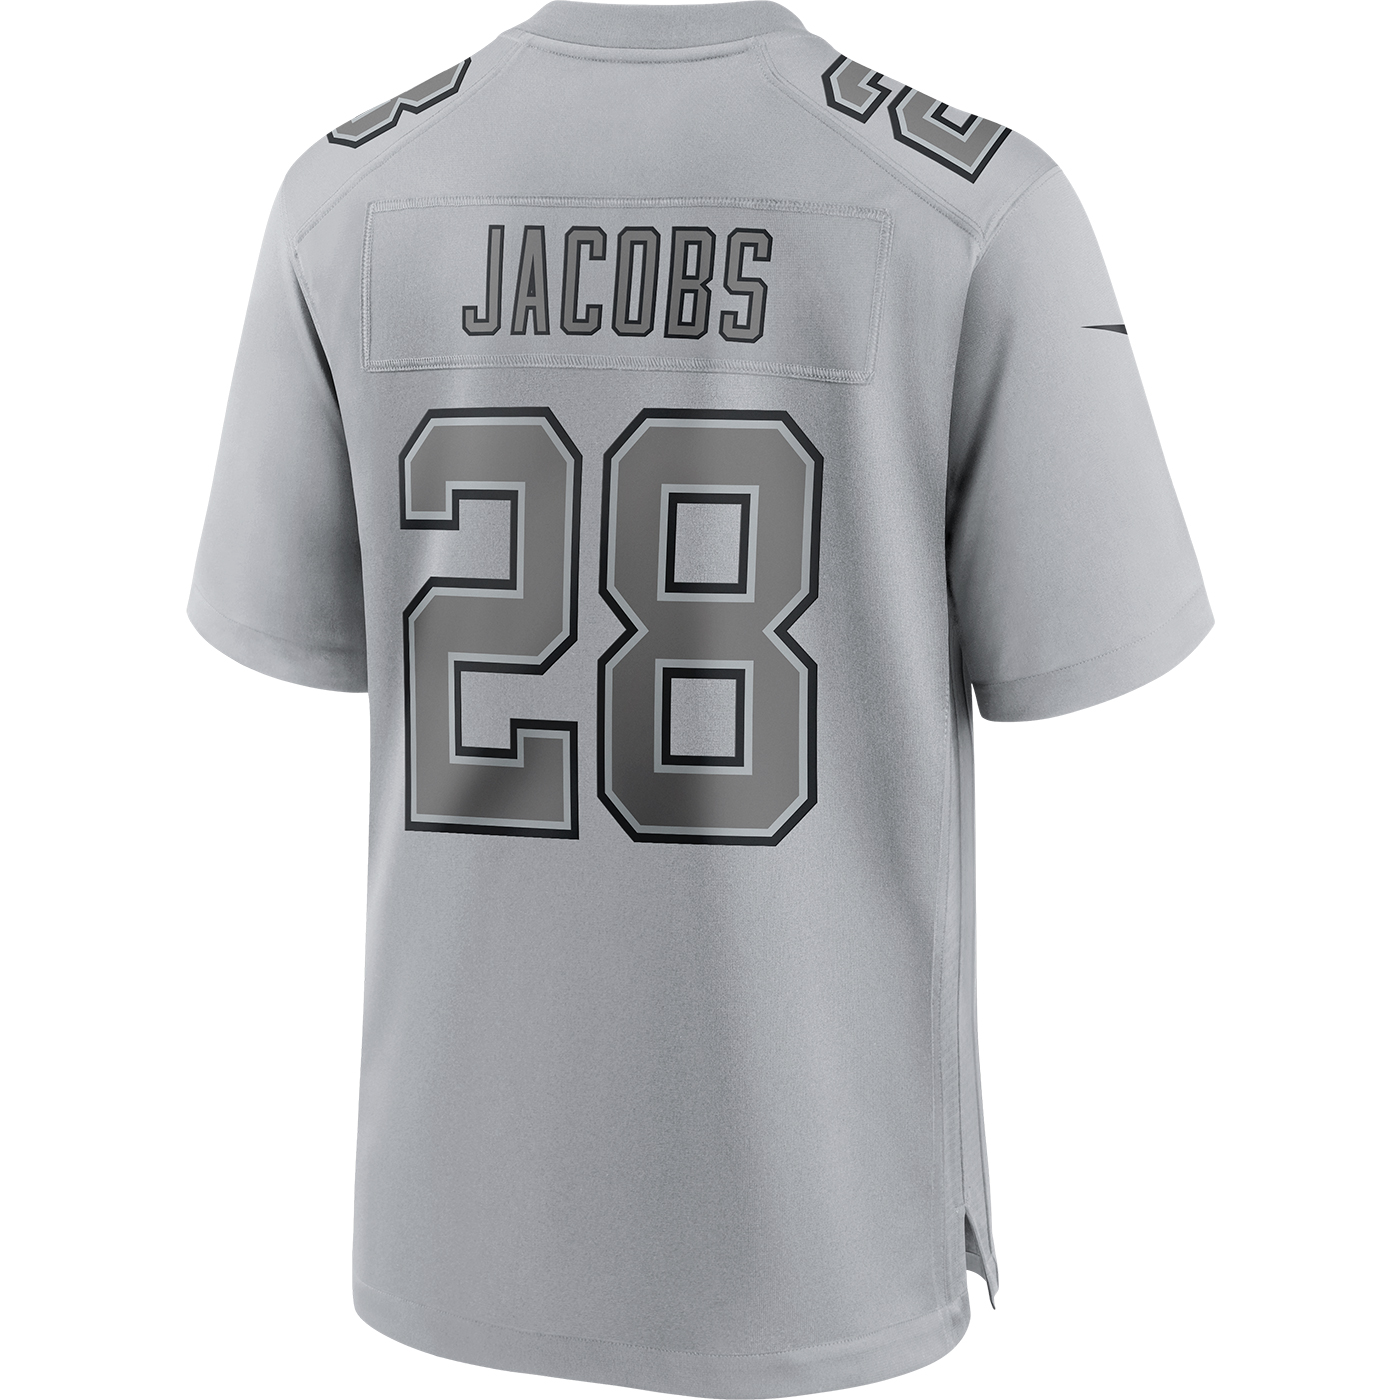 Josh Jacobs Jerseys, Josh Jacobs Shirt, Josh Jacobs Gear